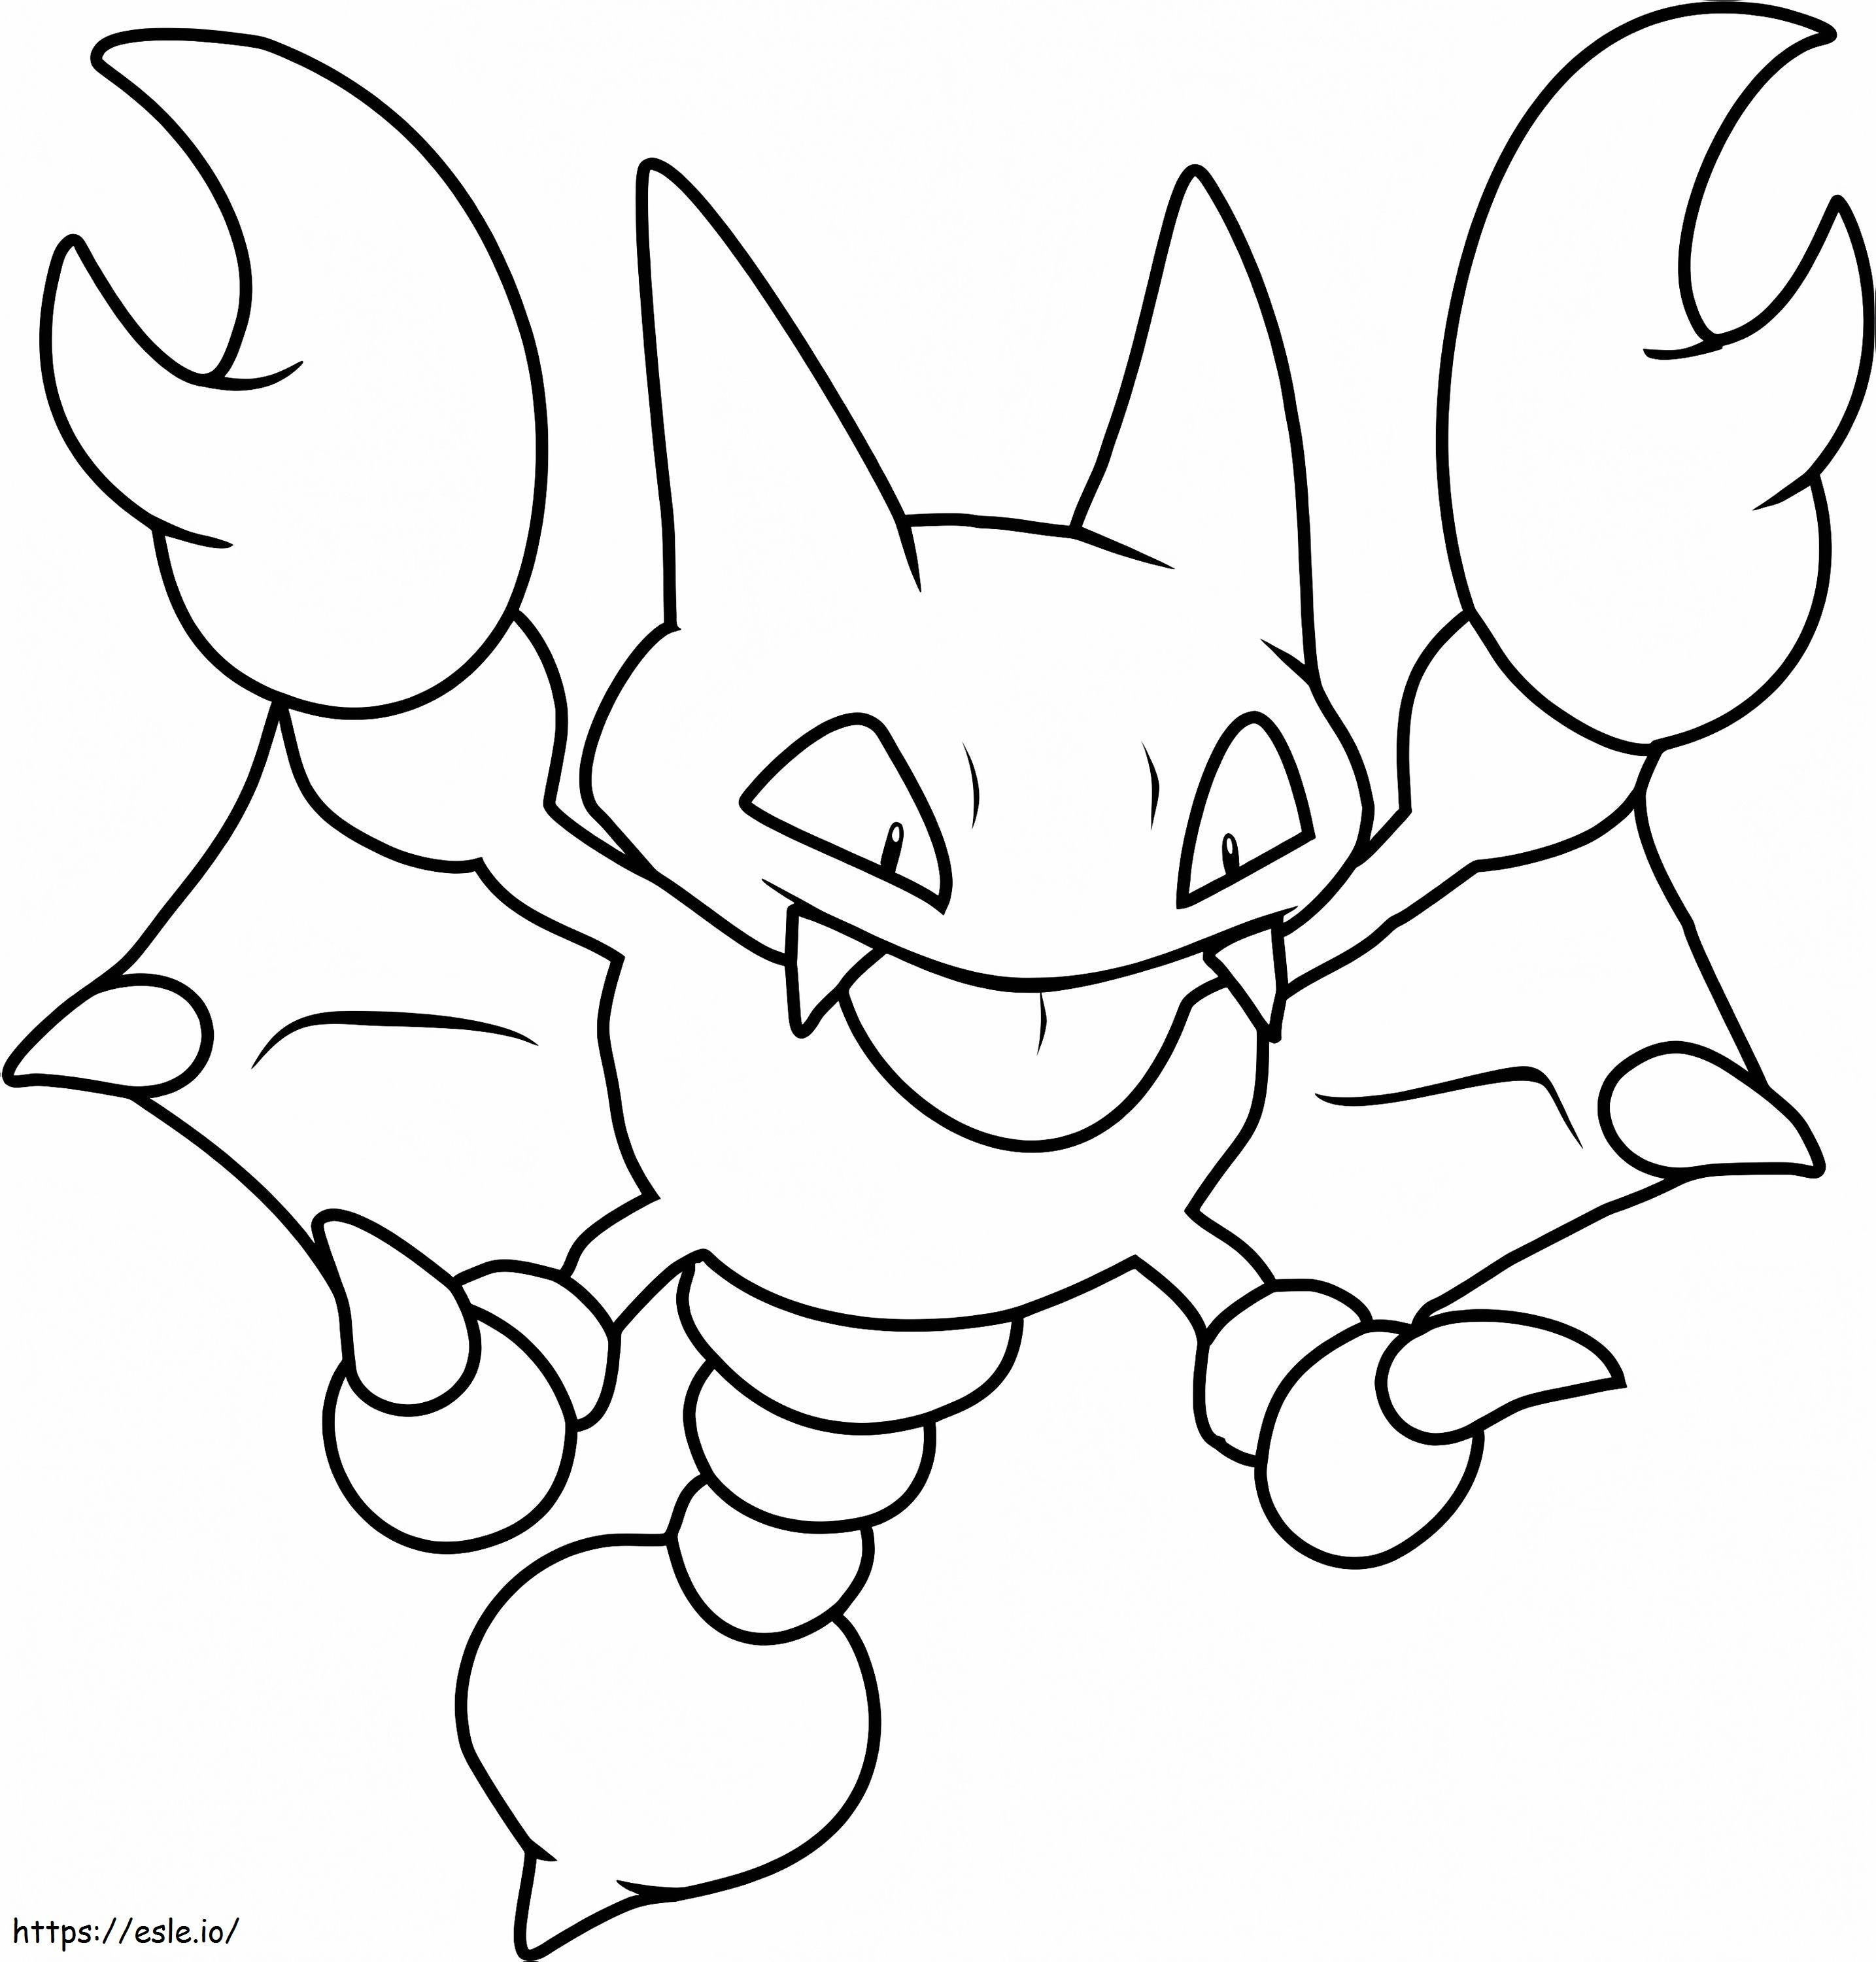 Gligar Pokémon kleurplaat kleurplaat